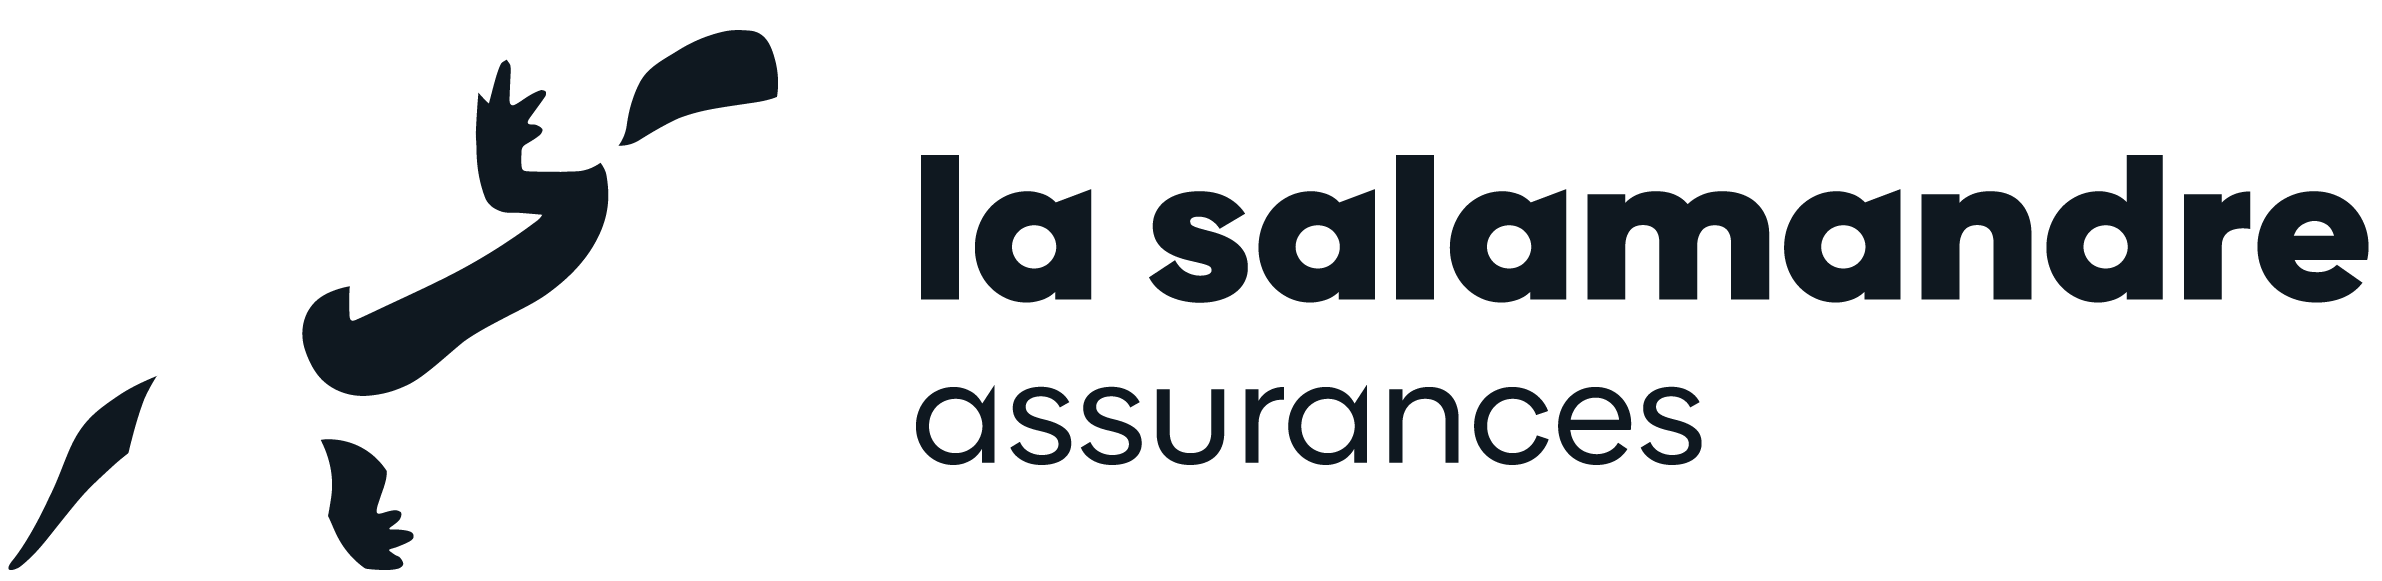 La Salamandre Assurances Logo Horizontal Blanc